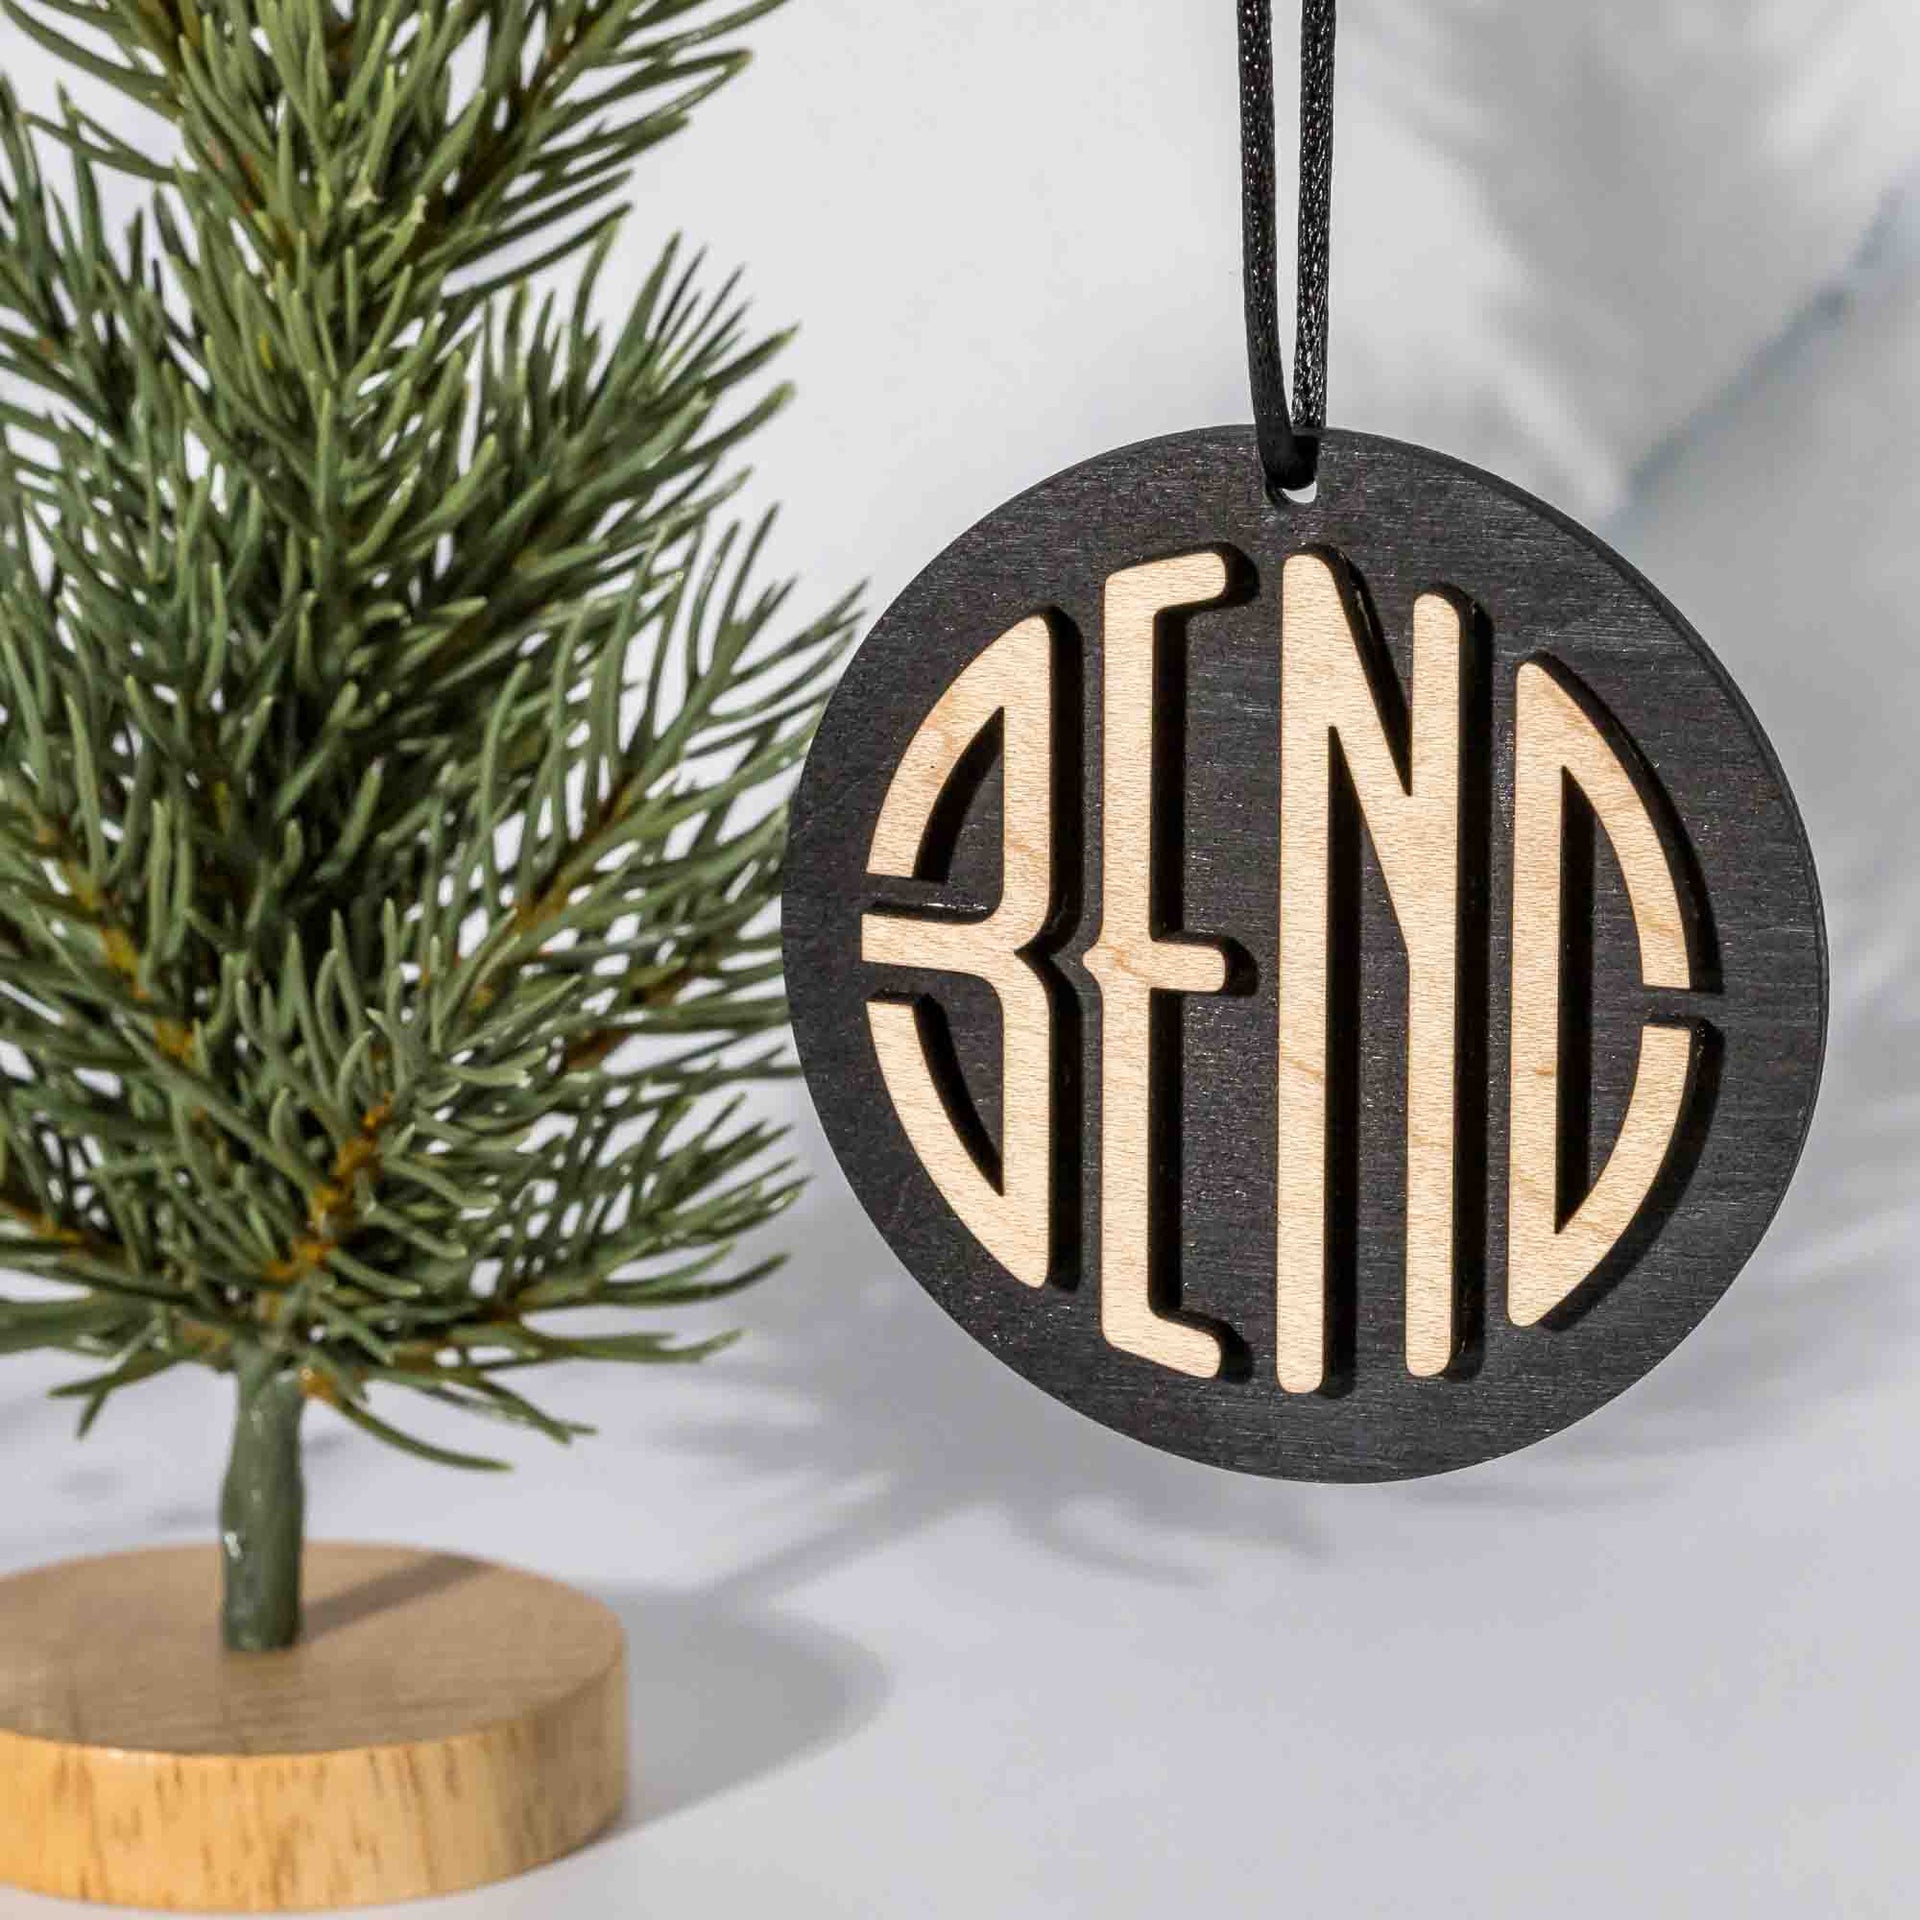 Christmas Ornament Paint Kit – LeeMo Designs